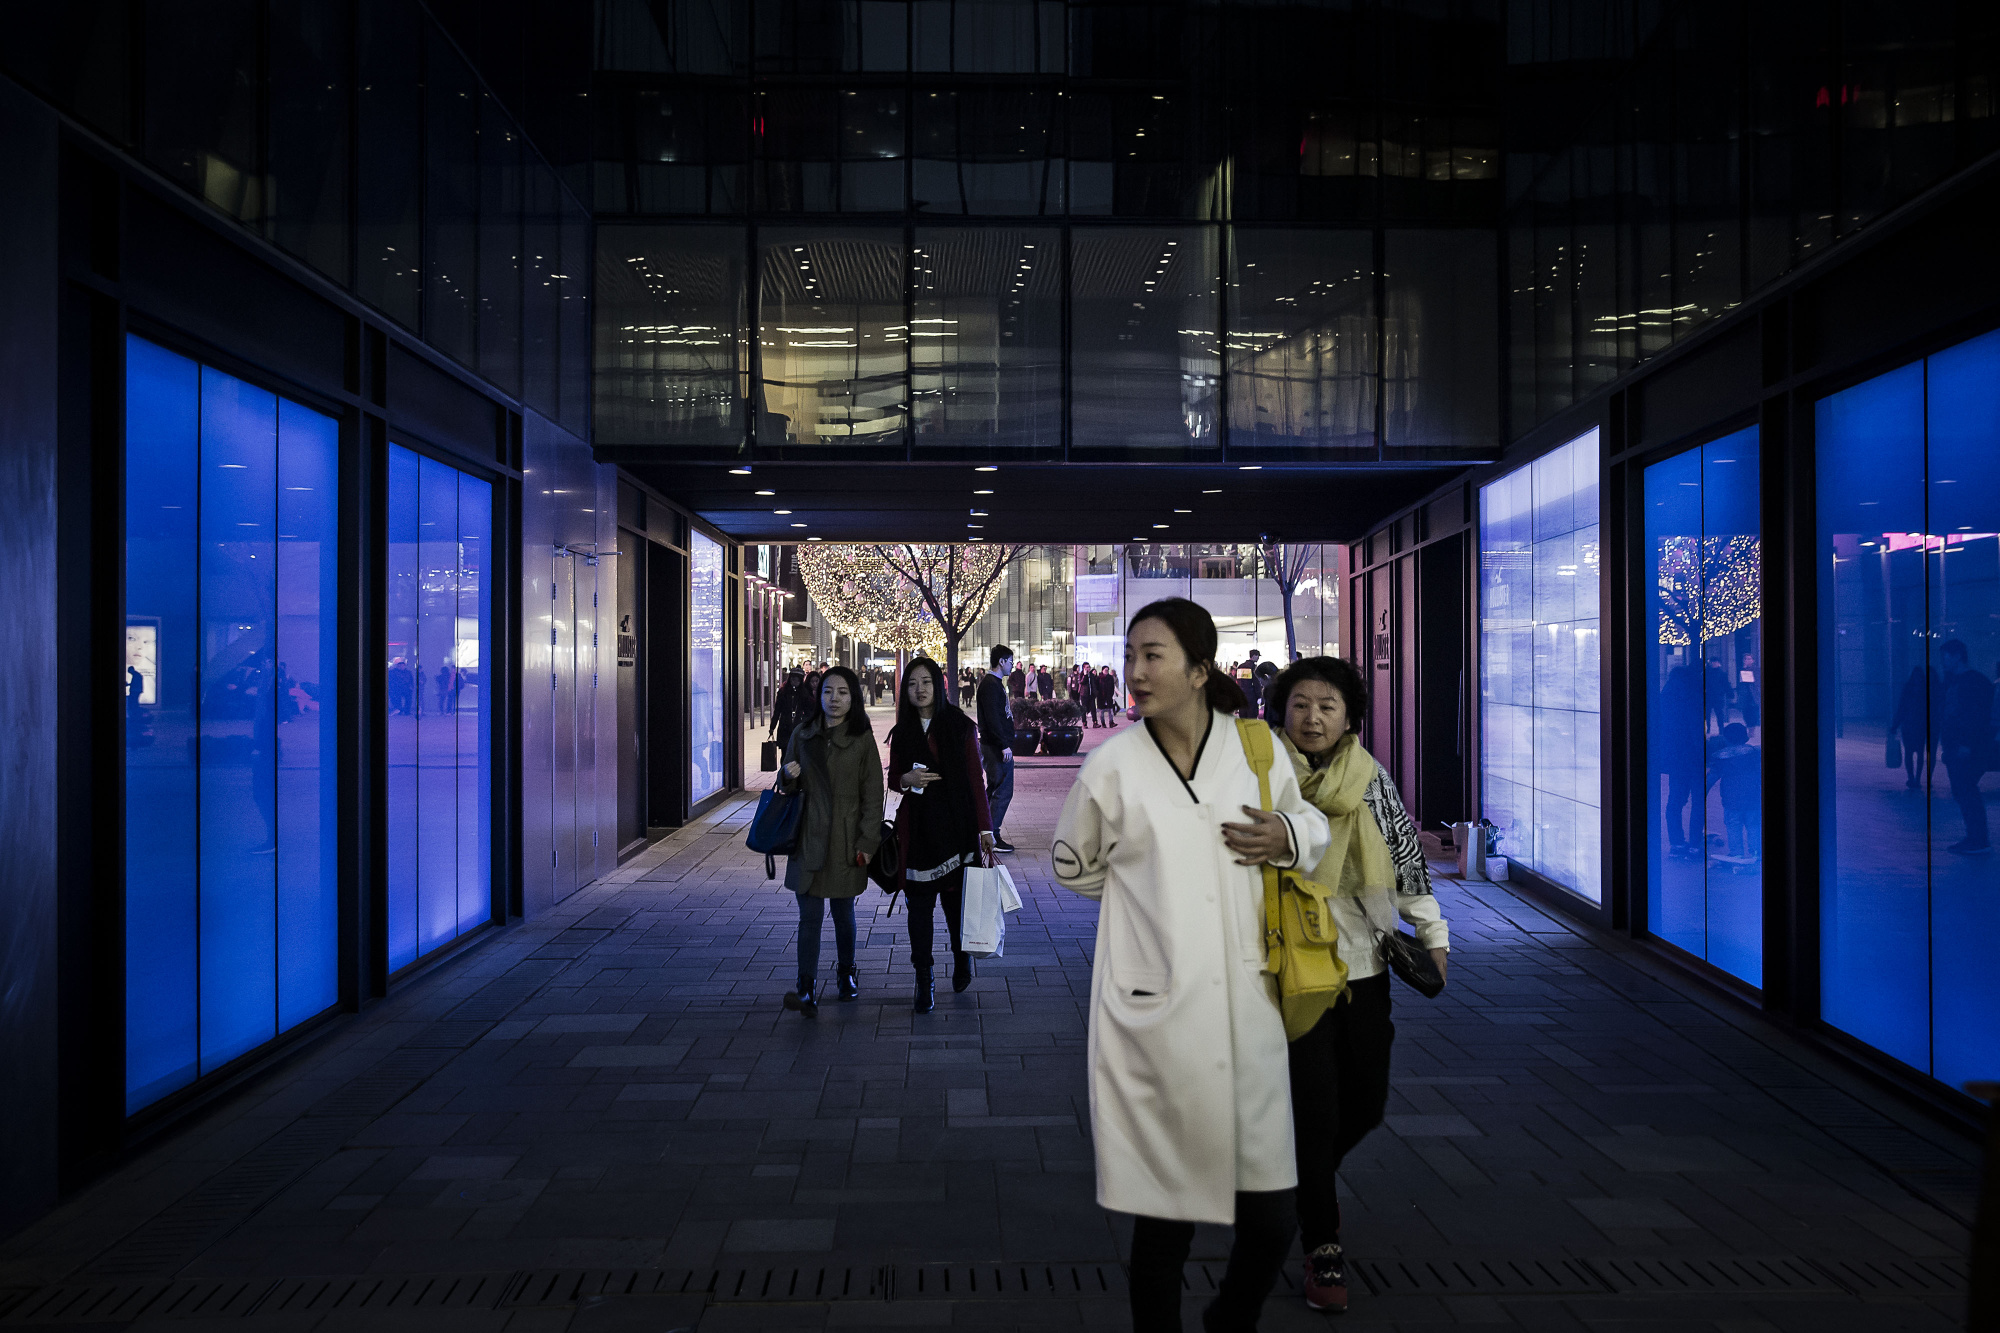 Shoppers walk through an open air shopping mall in Beijing, China.
